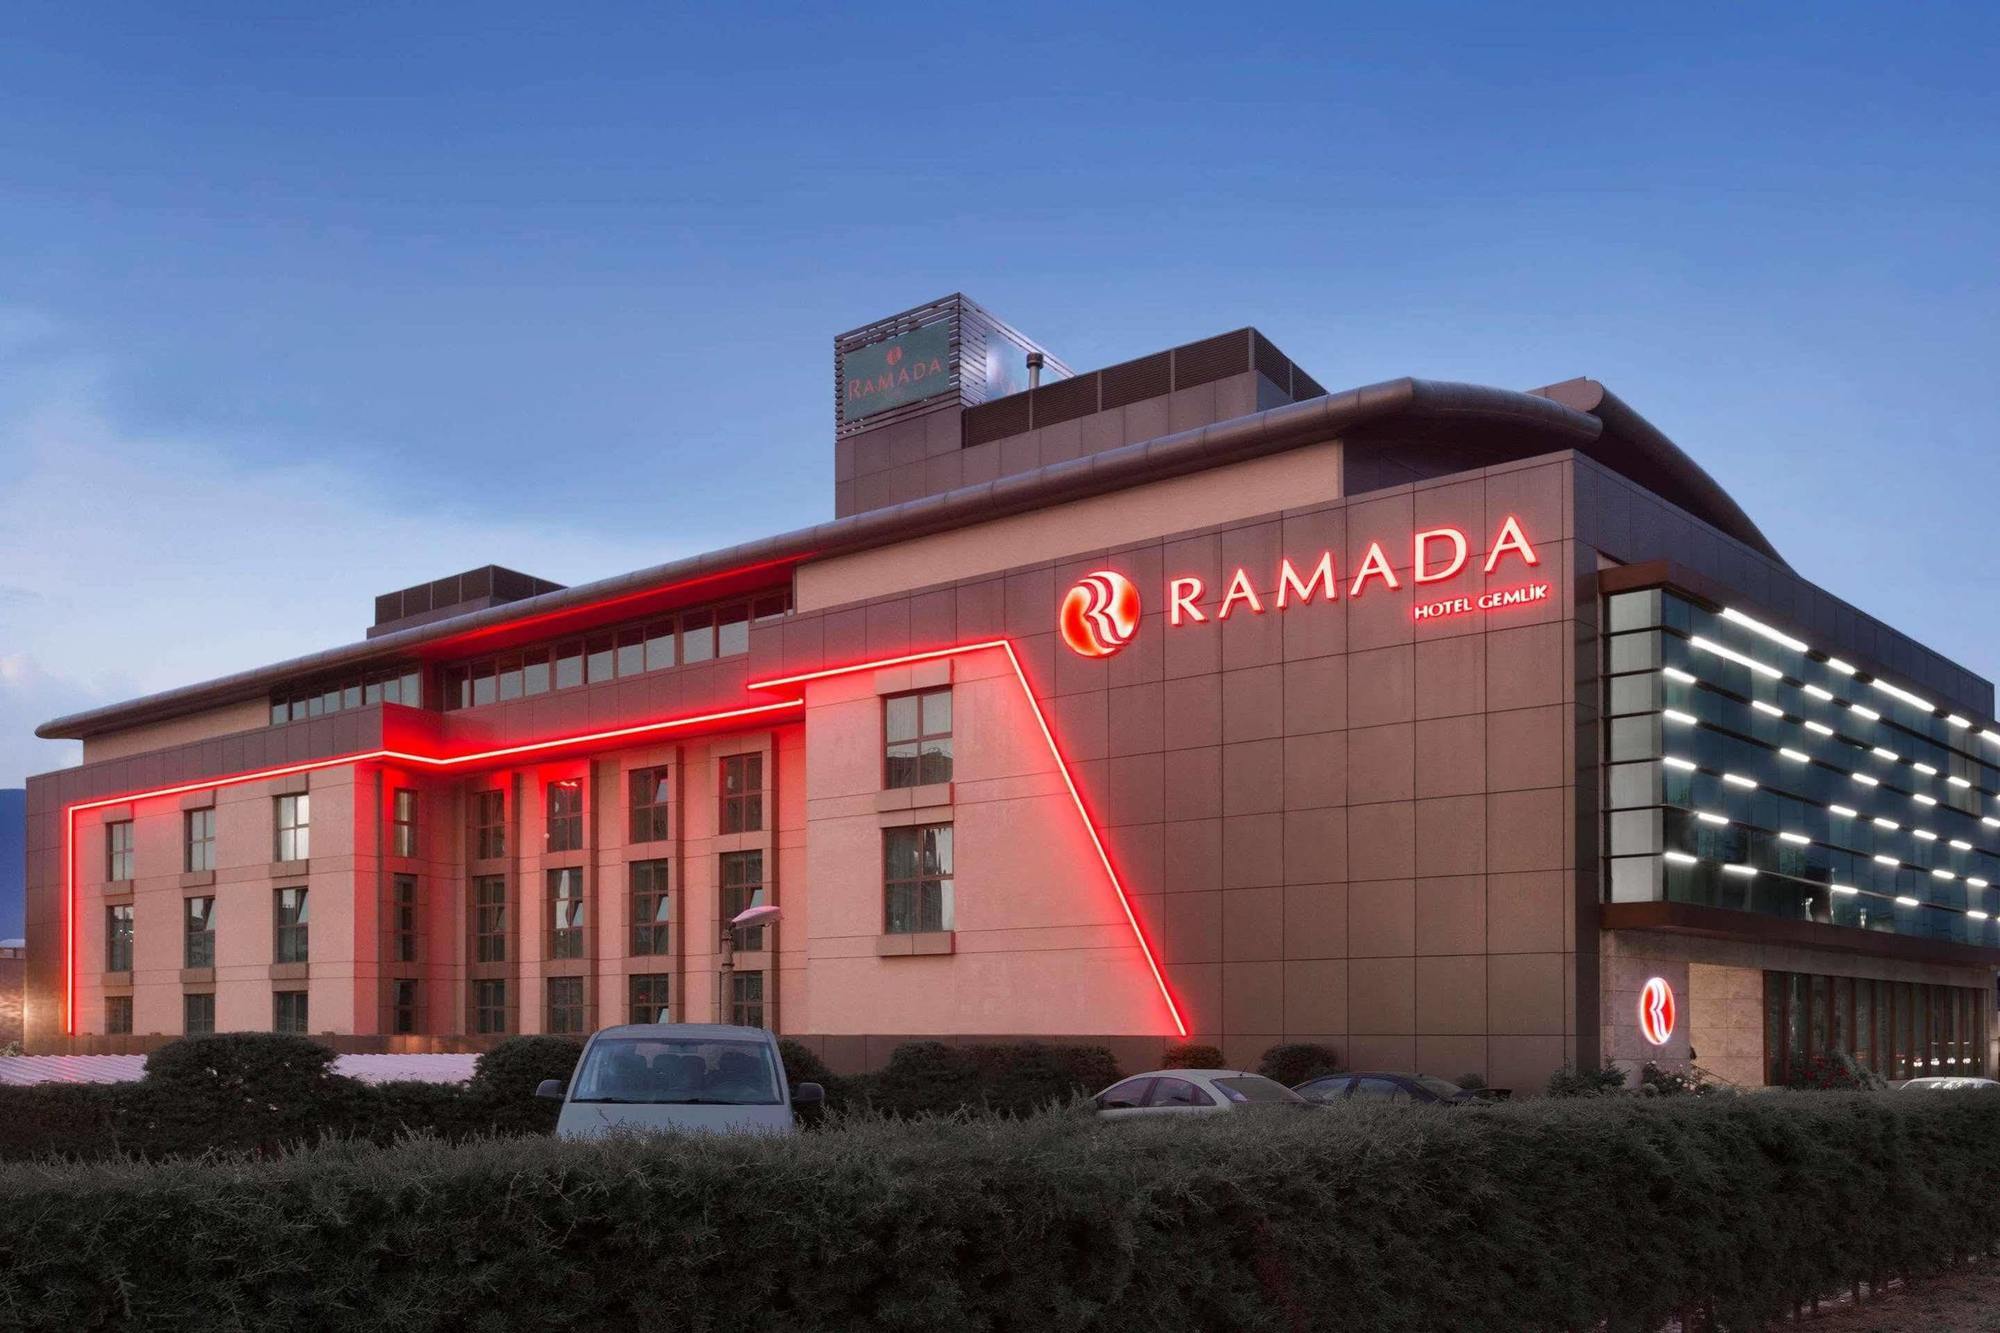 Ramada By Wyndham Gemli̇K Hotel Gemlik Exterior photo